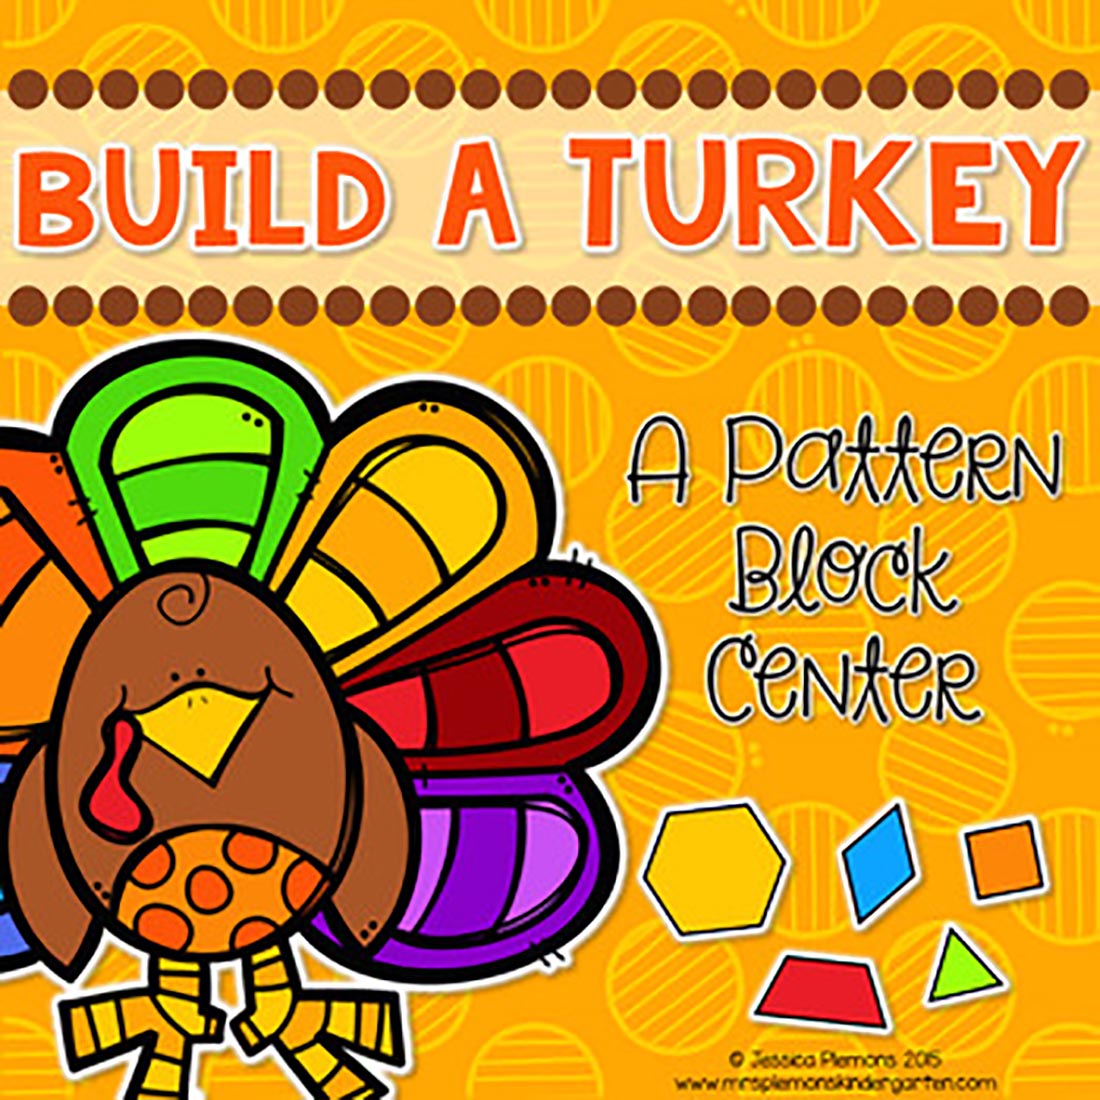 Build a Turkey: A Pattern Block Math Center cover image.